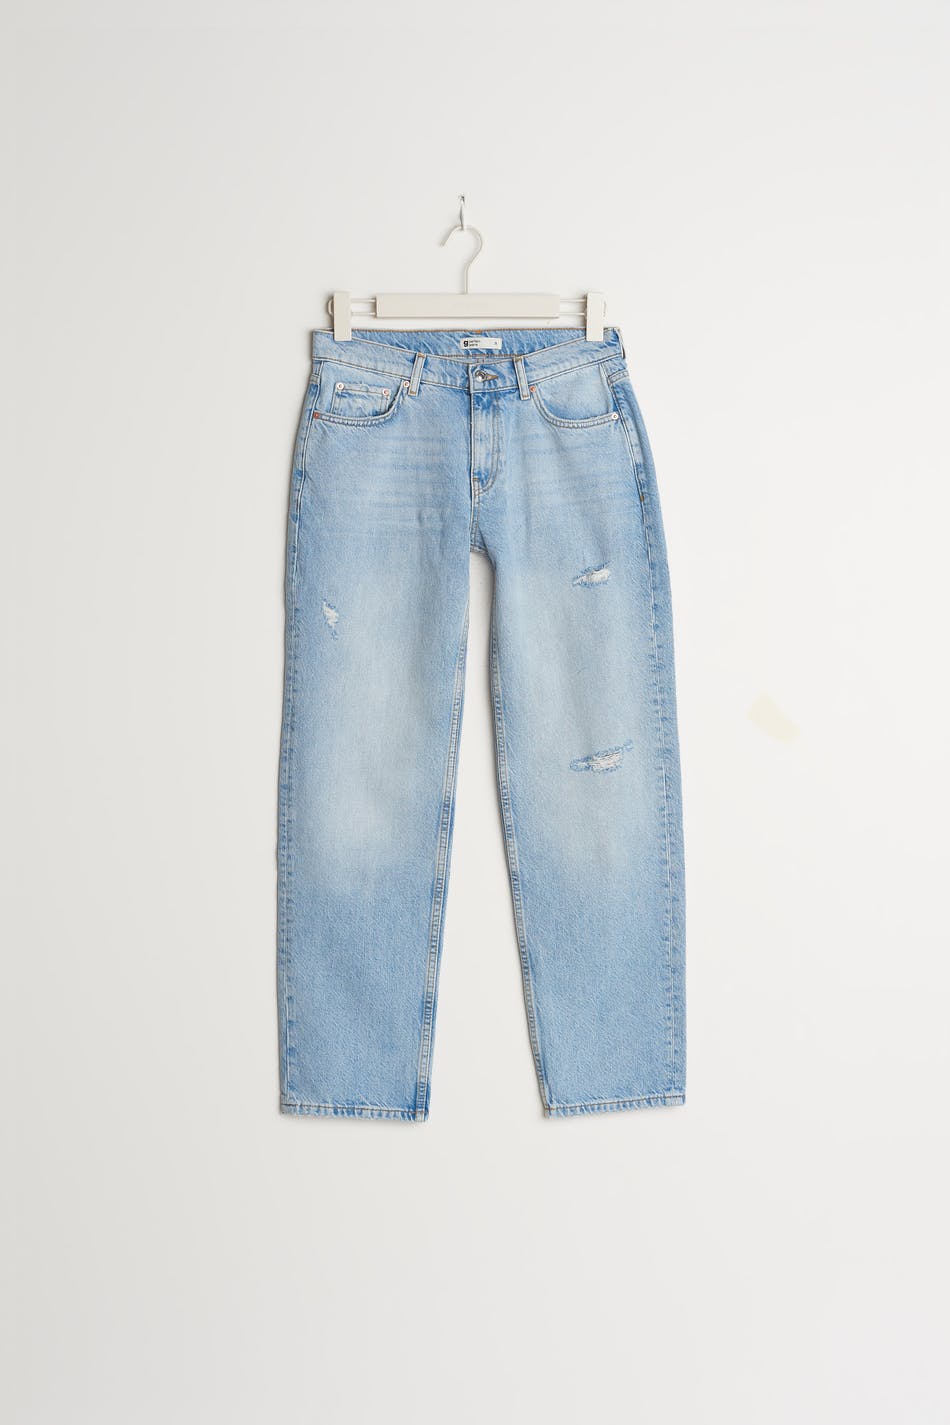 90s petite low waist jeans